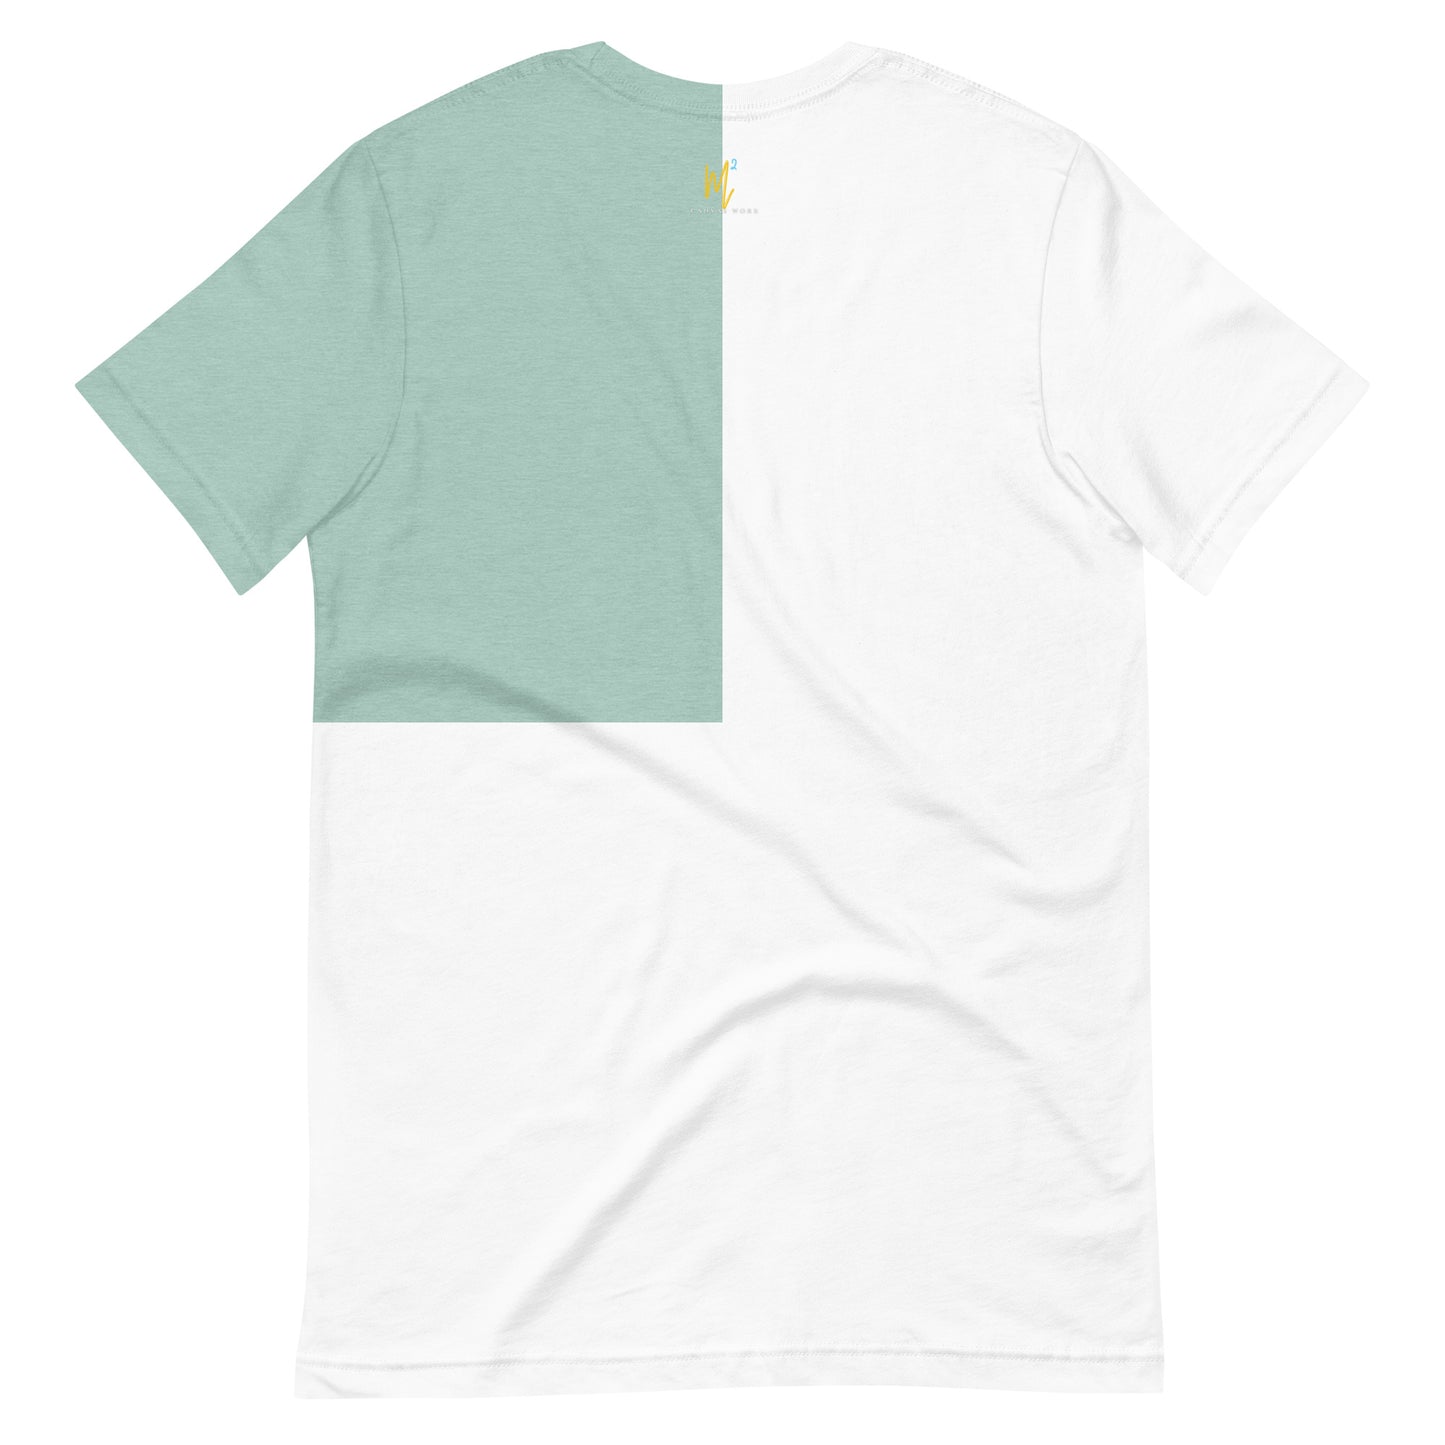 M² Canvas Worx T-shirt